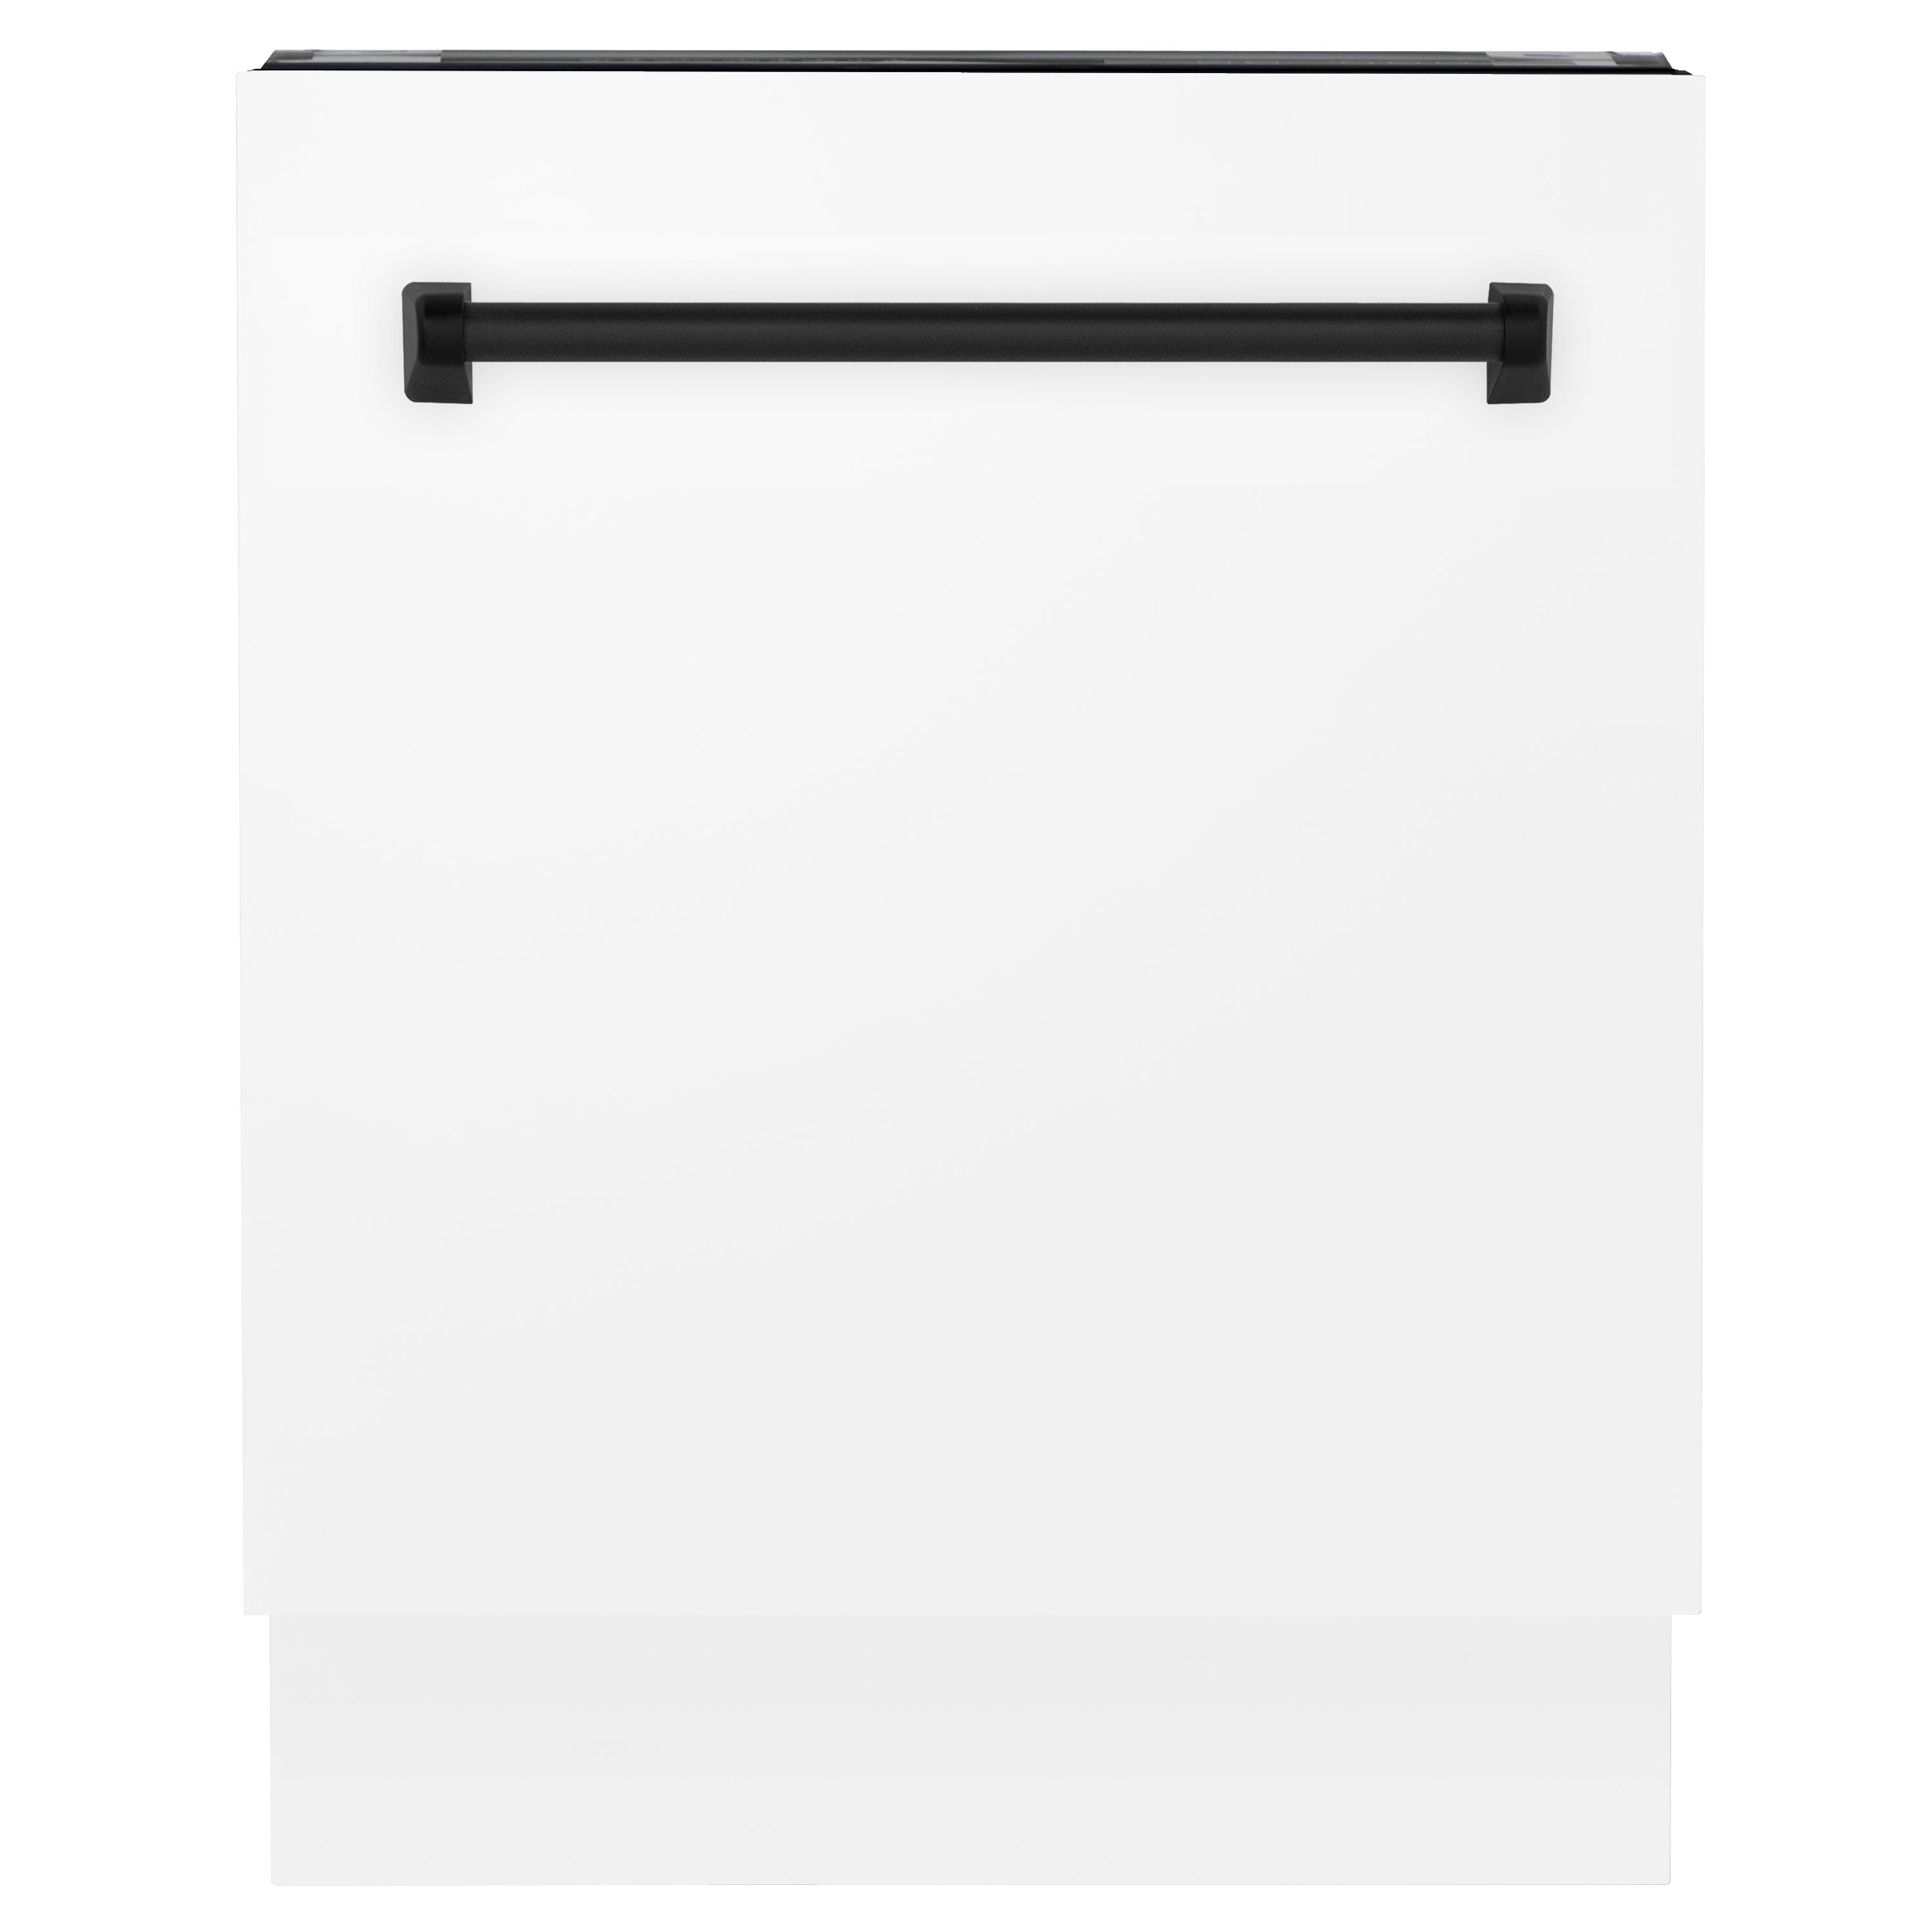 ZLINE Autograph Series 24 inch Tall Dishwasher in White Matte with Matte Black Handle